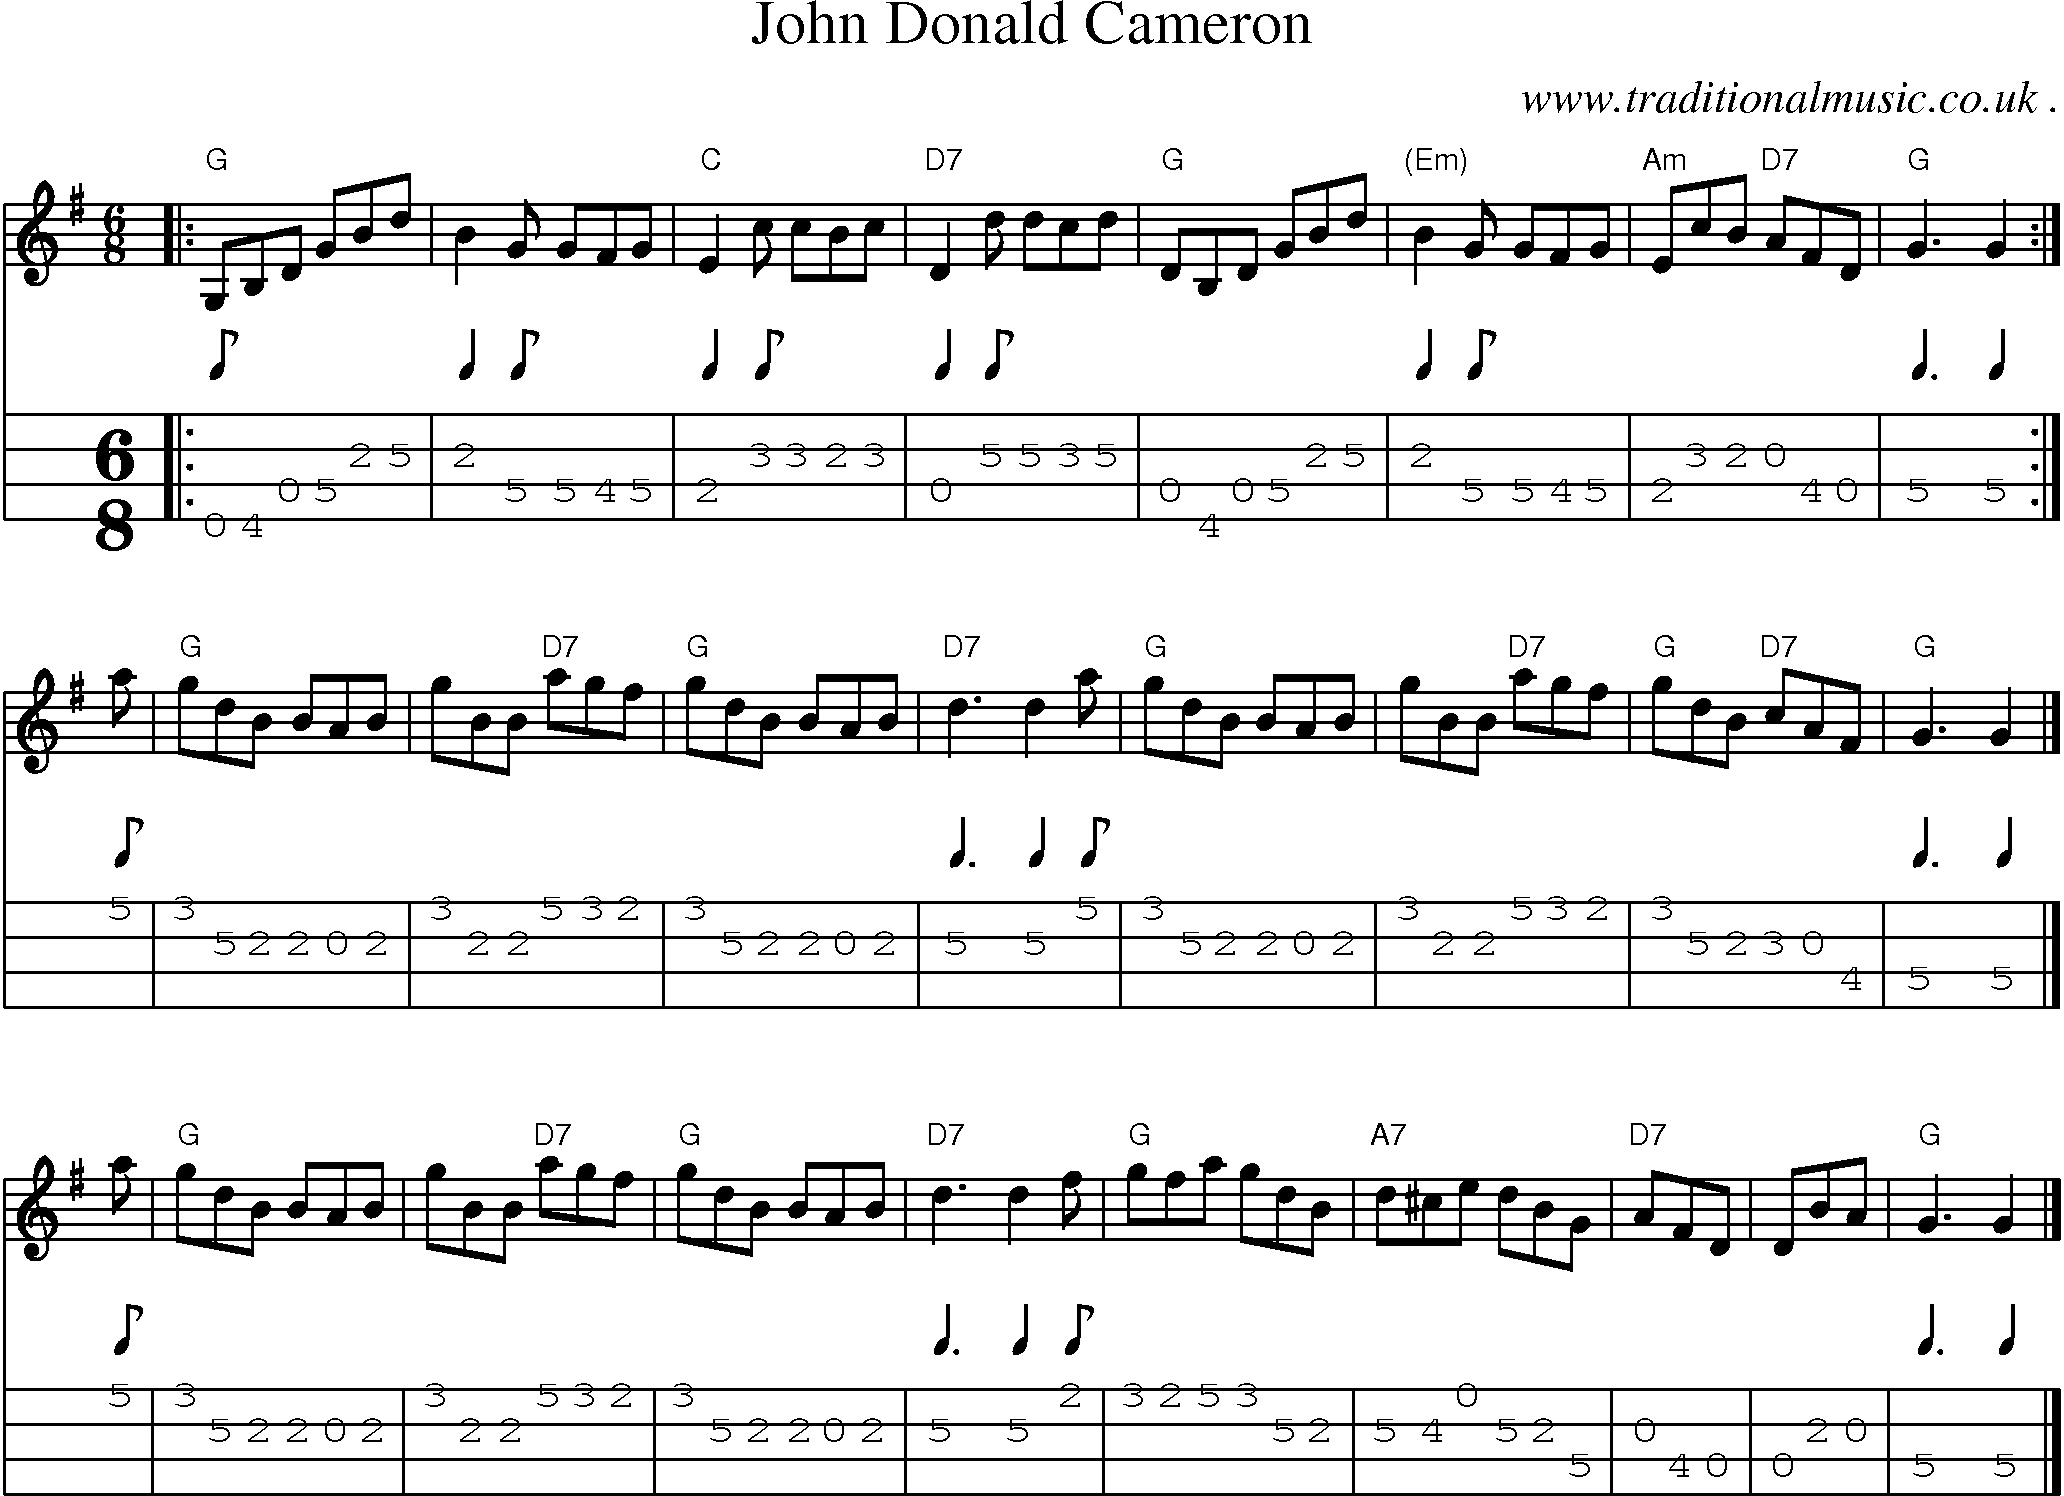 Sheet-music  score, Chords and Mandolin Tabs for John Donald Cameron